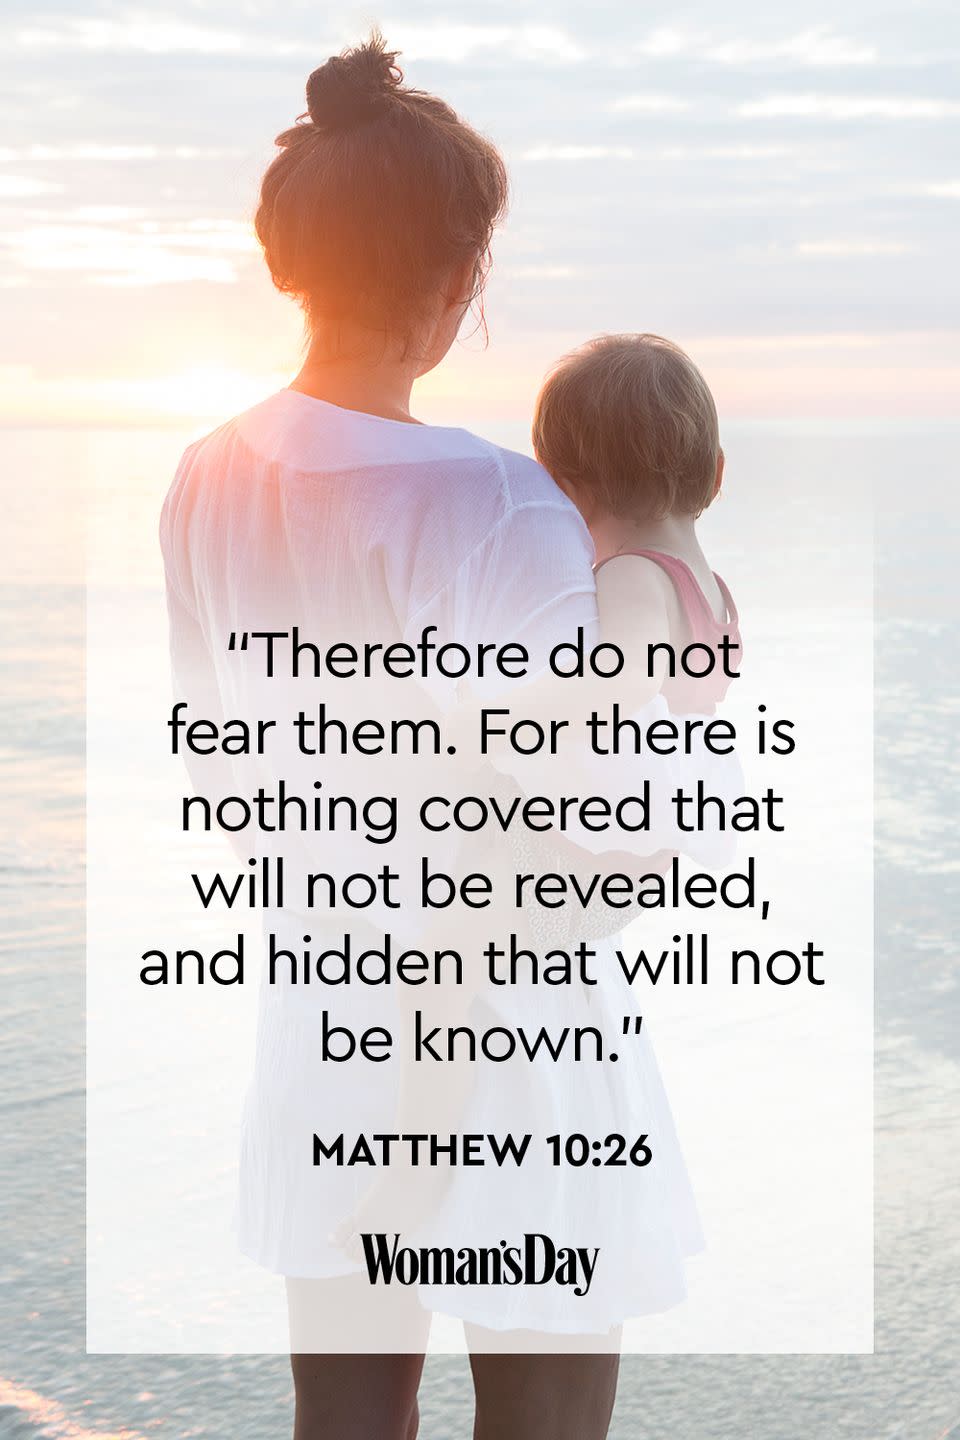 Matthew 10:26